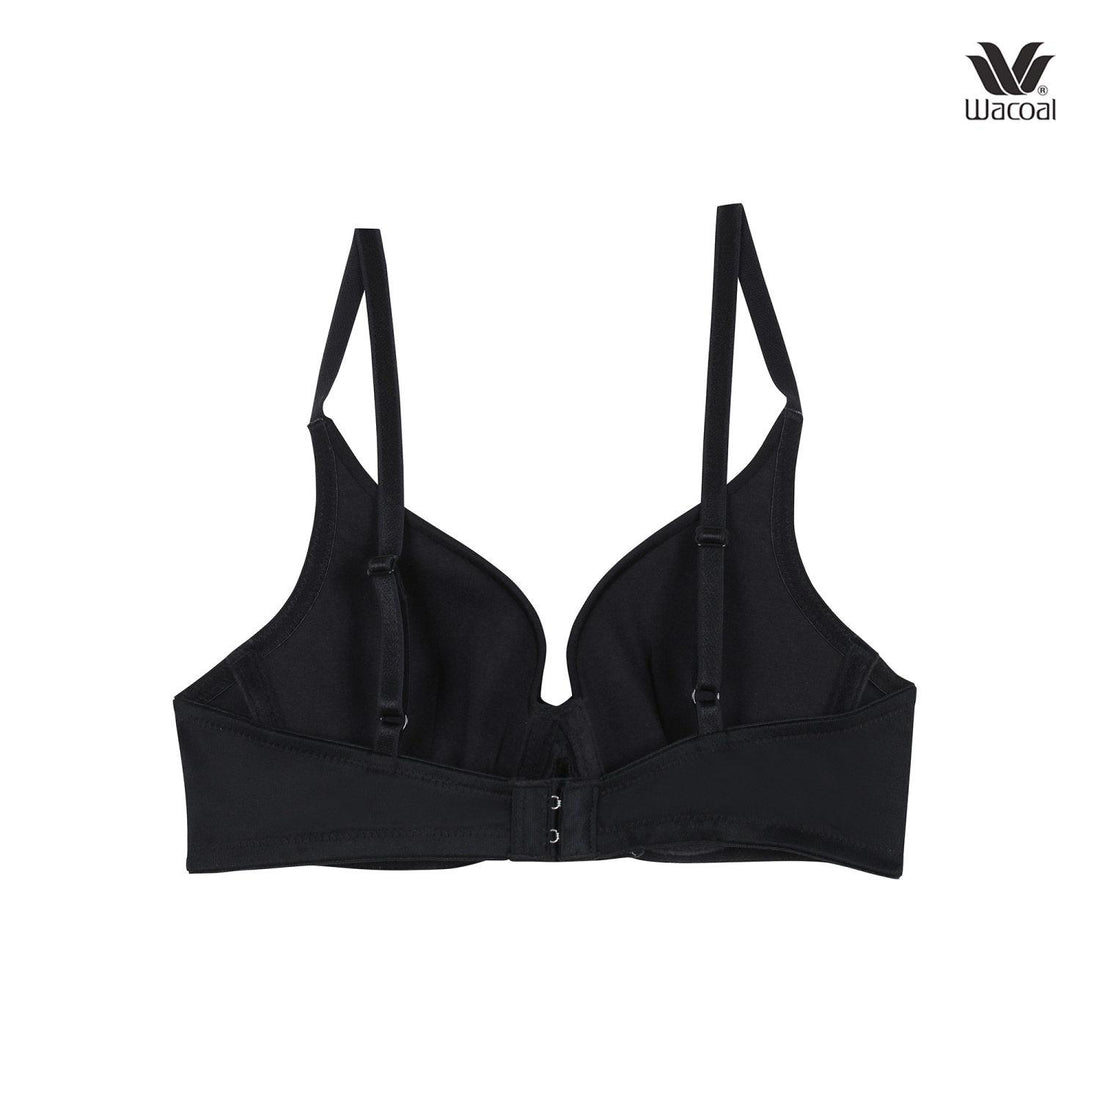 Wacoal Seamless Bra, seamless bra, smooth, comfortable, model WB5A87, black (BL)